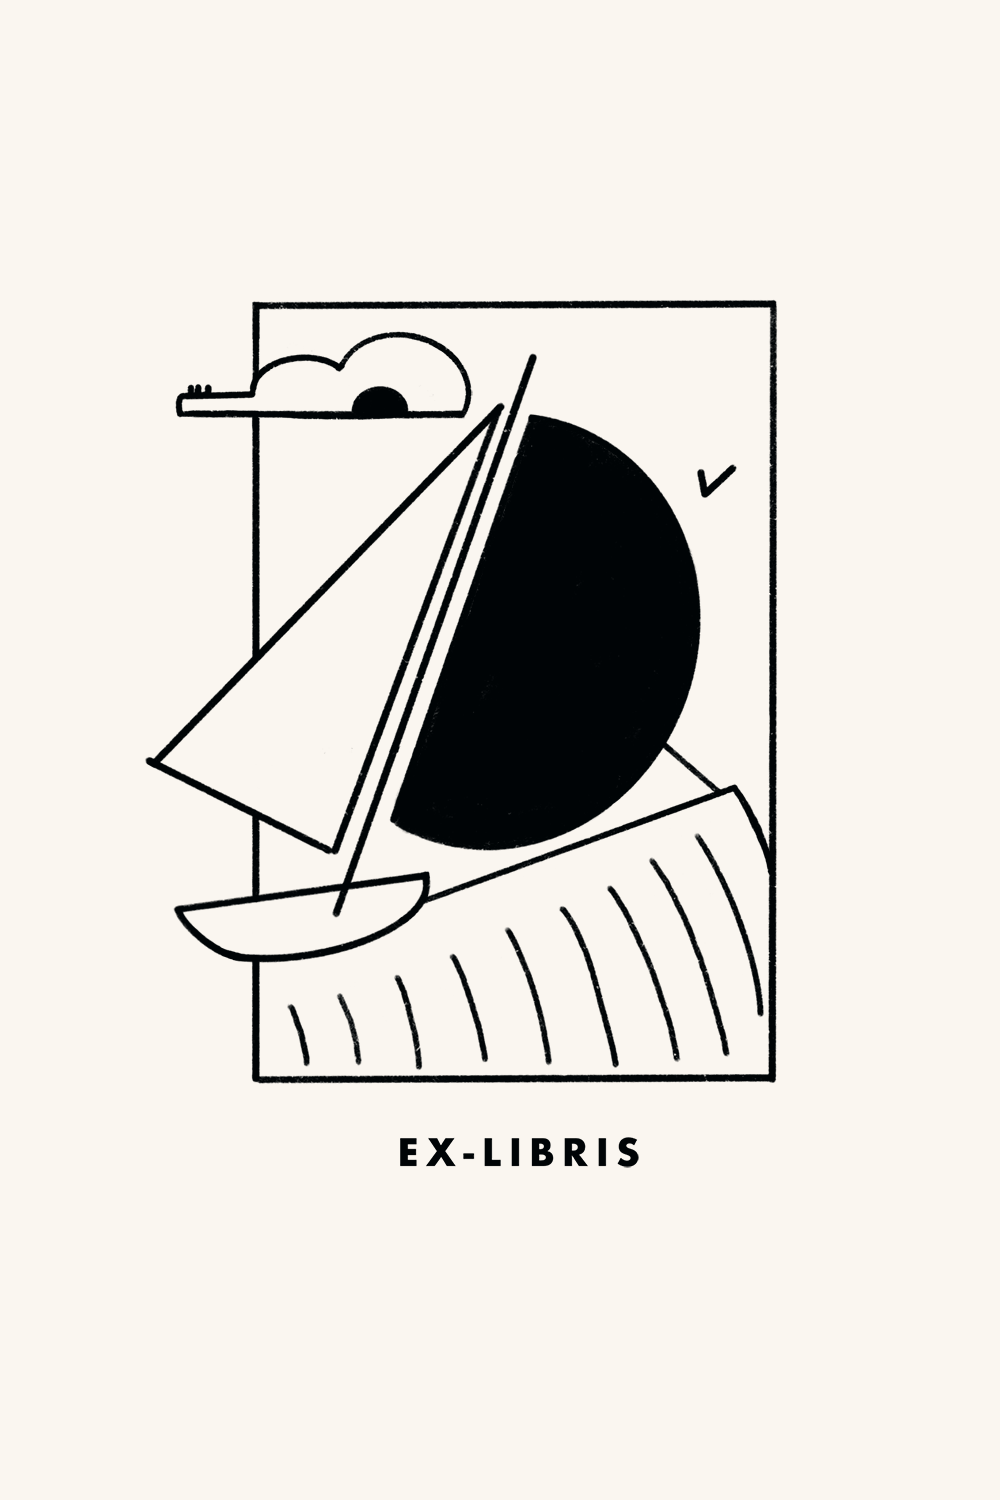 Dibujo de un velero sobre olas de libros